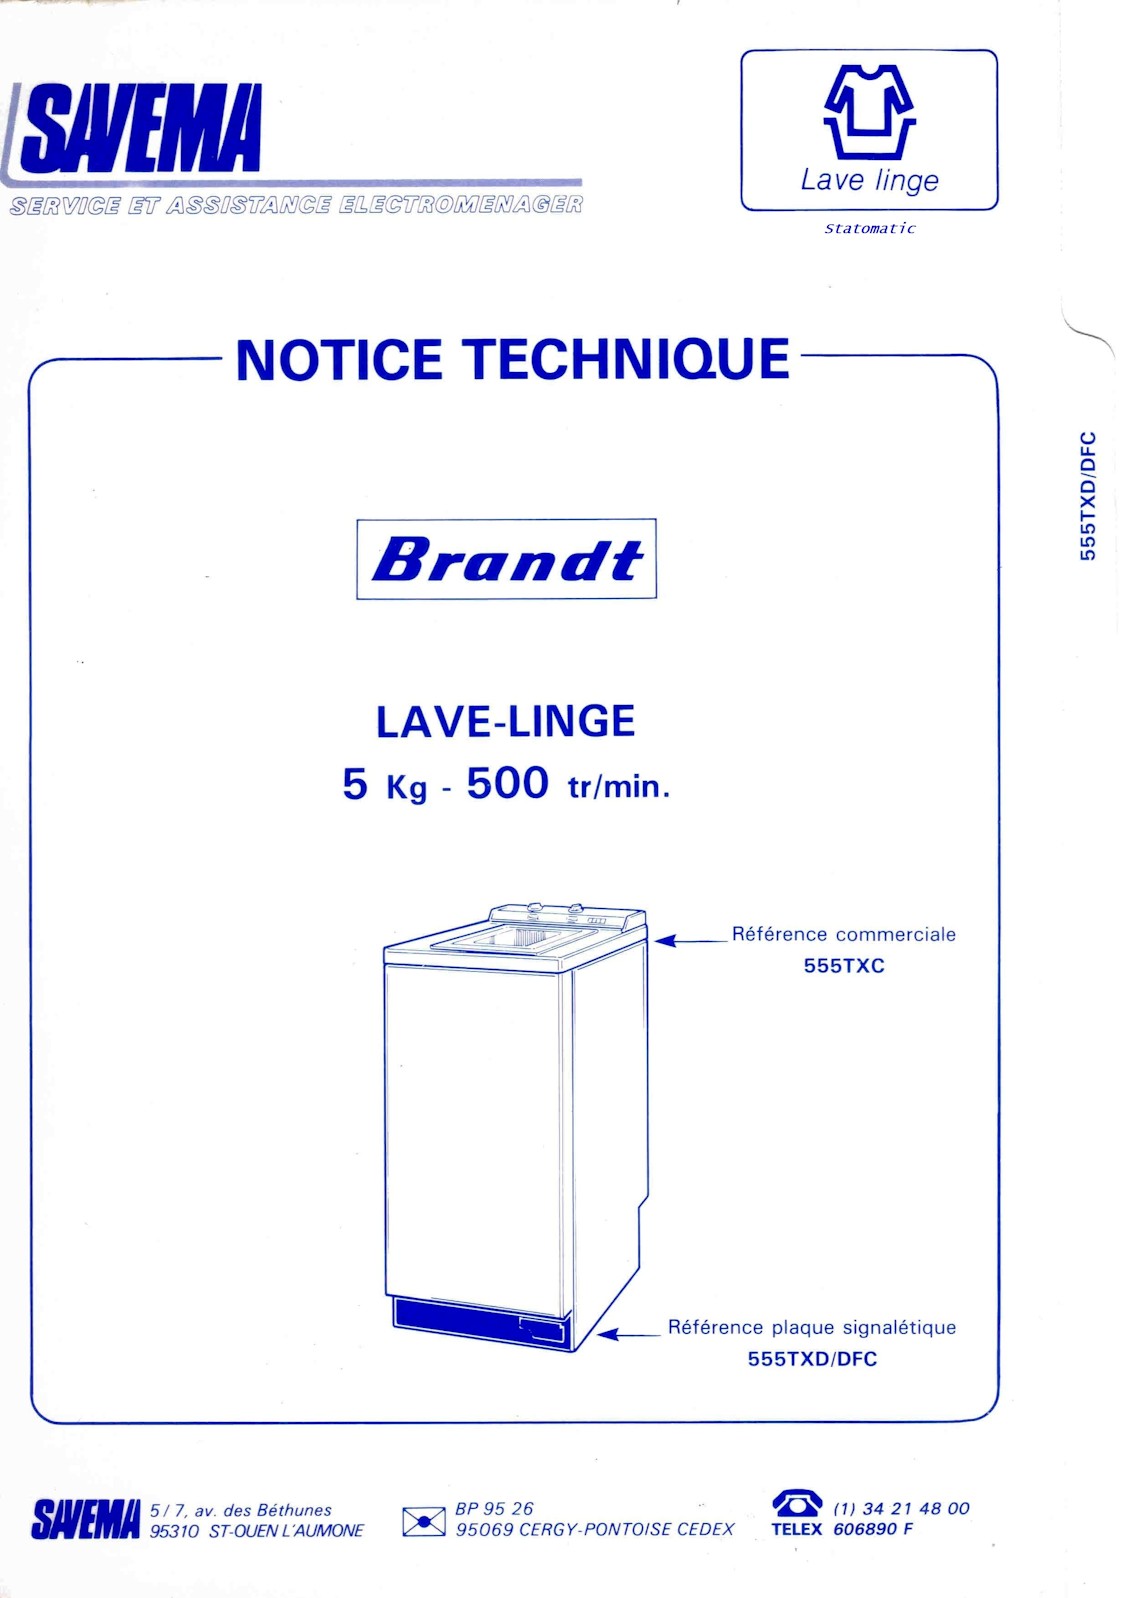 Lave linge 5kg - 500tr/min Brandt 555TXC.